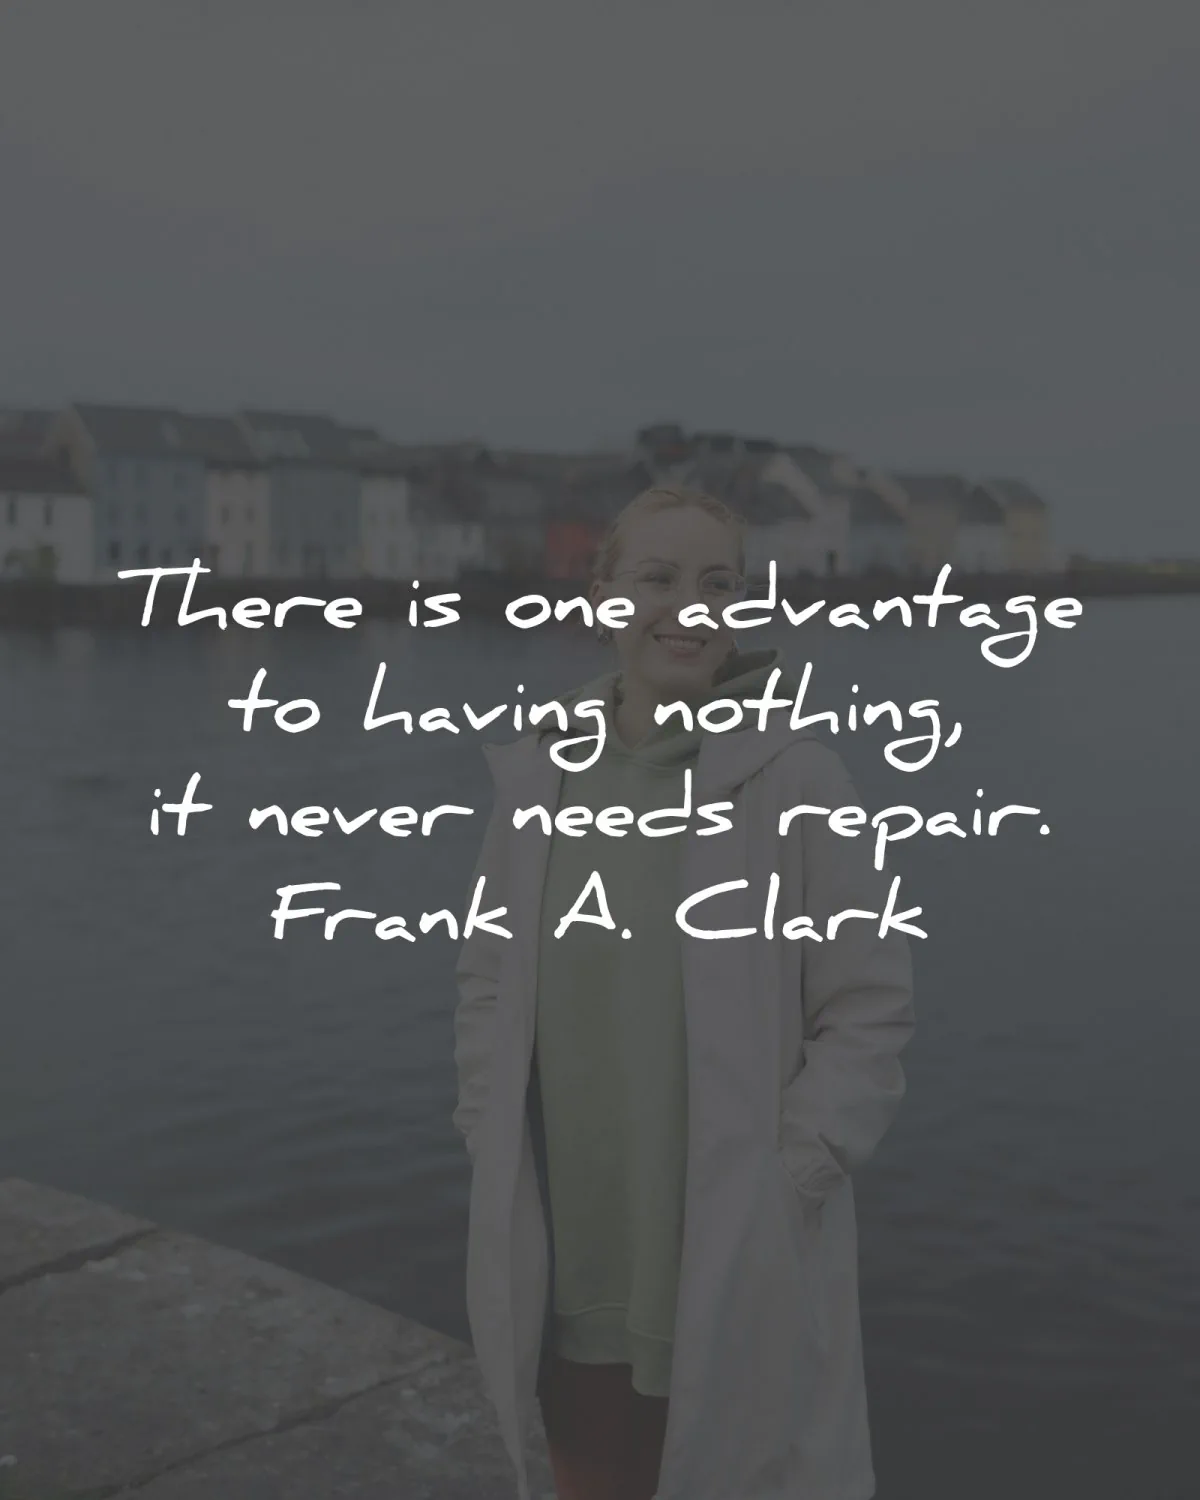 simplicity quotes one advantage having nothing franck clark wisdom